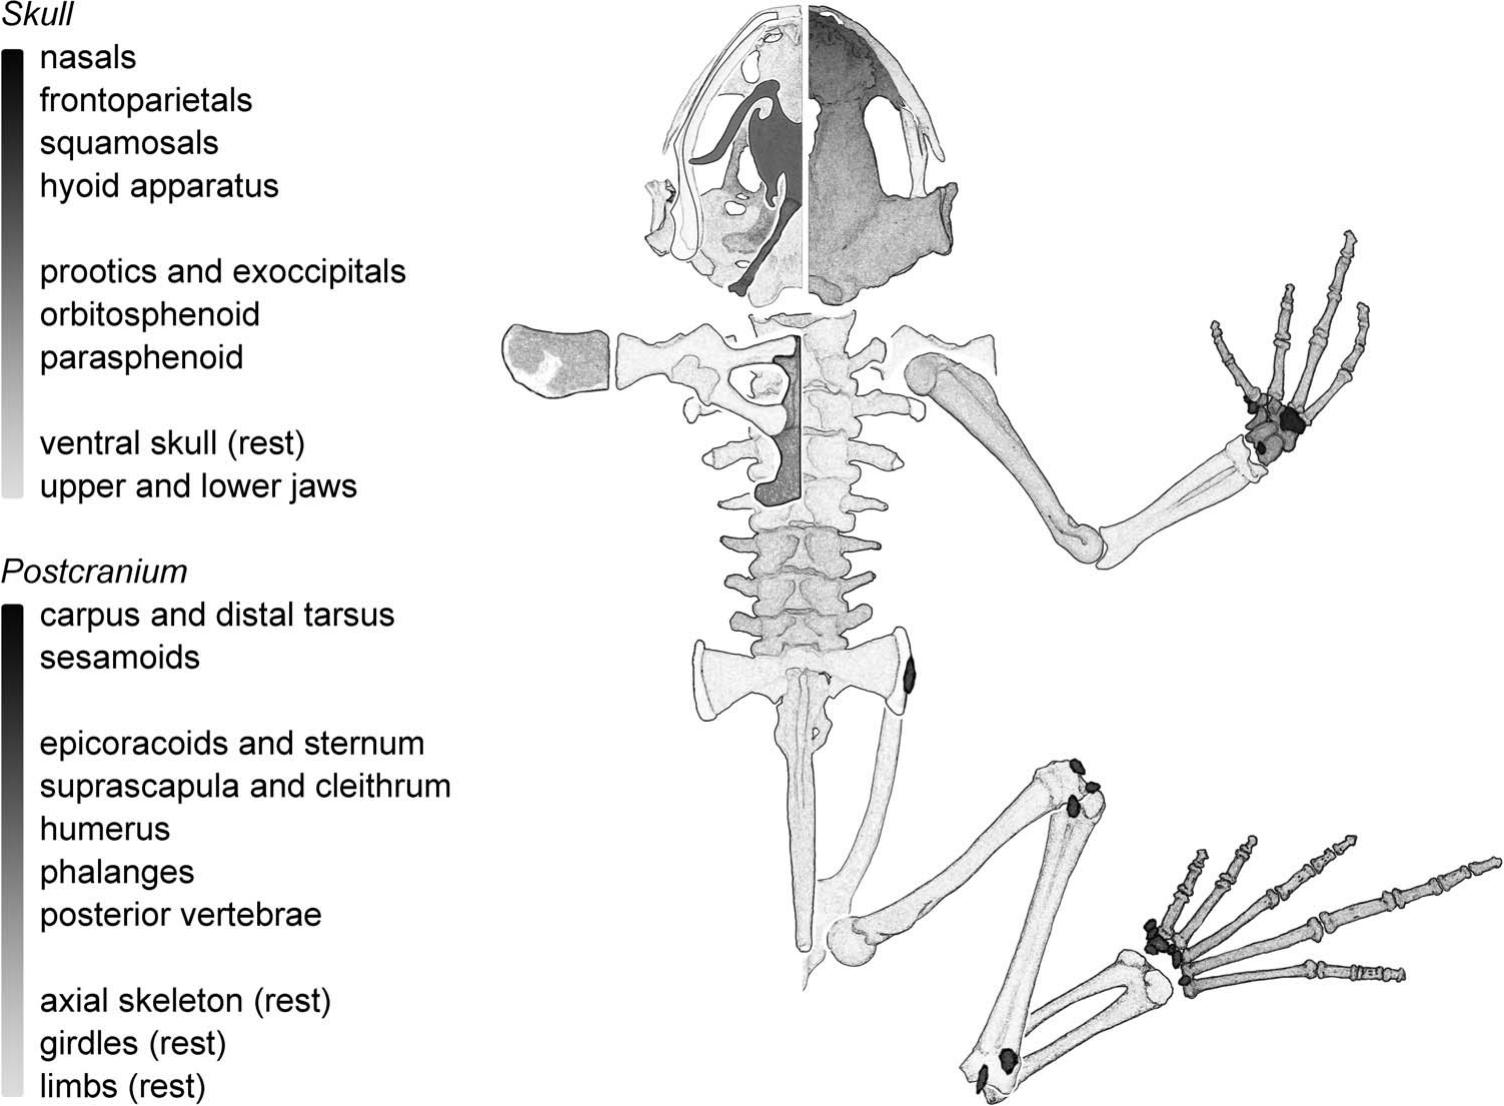 atlas vertebra of frog